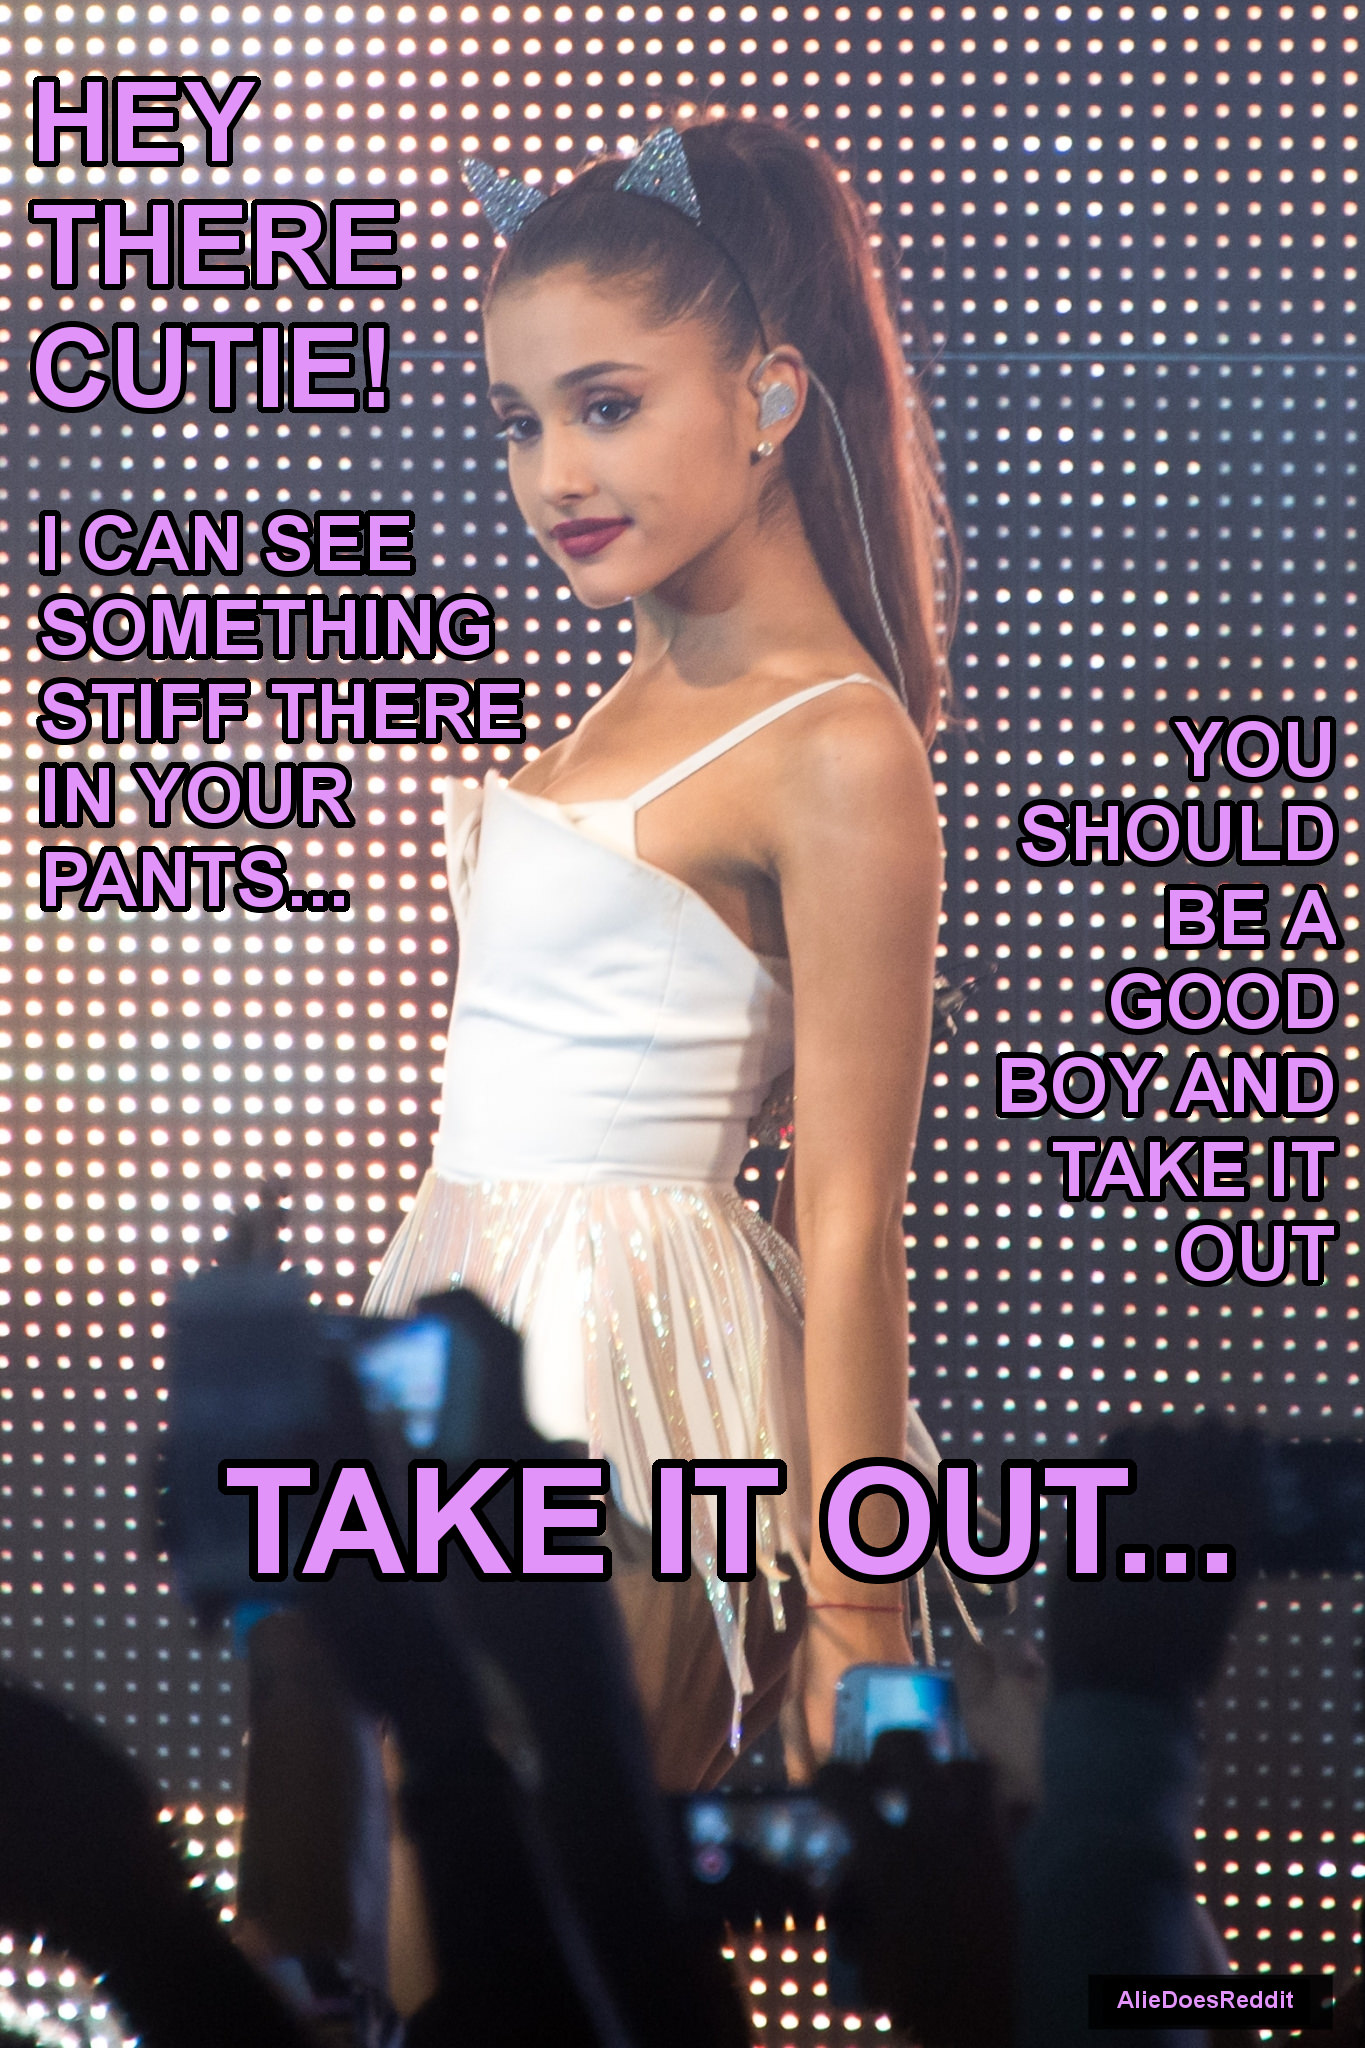 Ariana Caption JOI 1 - Image Chest - Free Image Hosting And Sharing ...